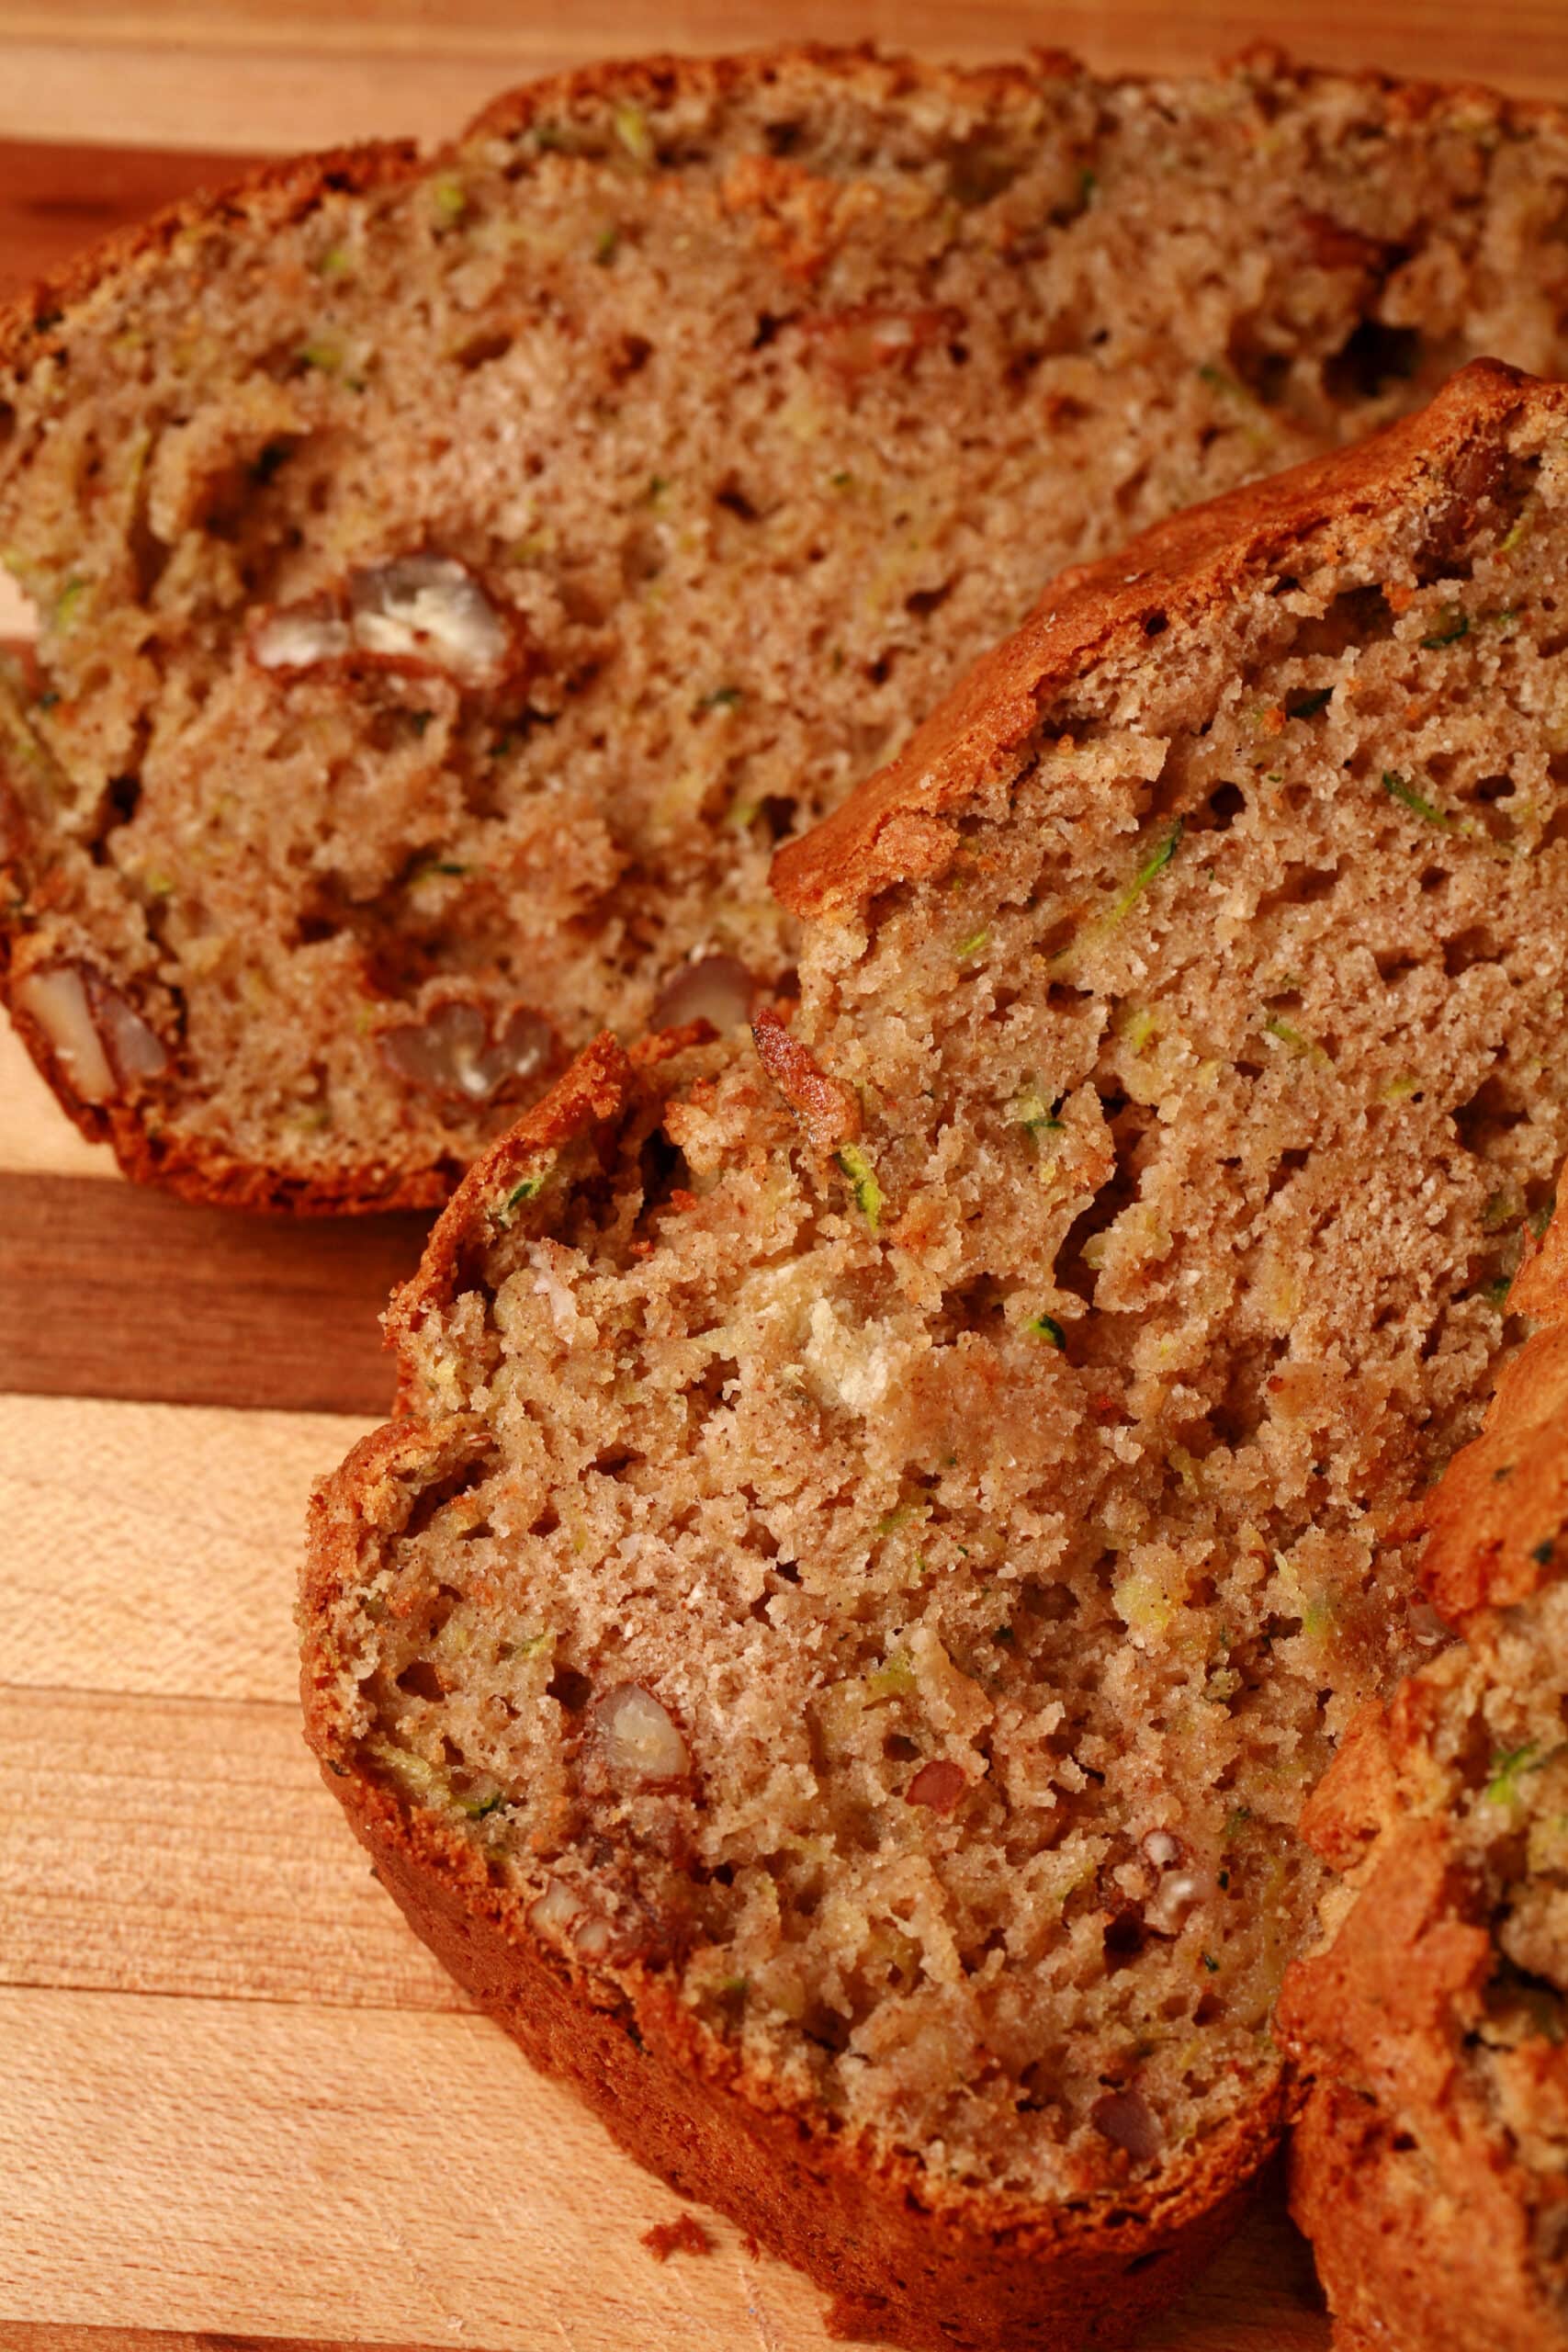 A sliced loaf of gluten-free zucchini bread on a wooden cutting board.